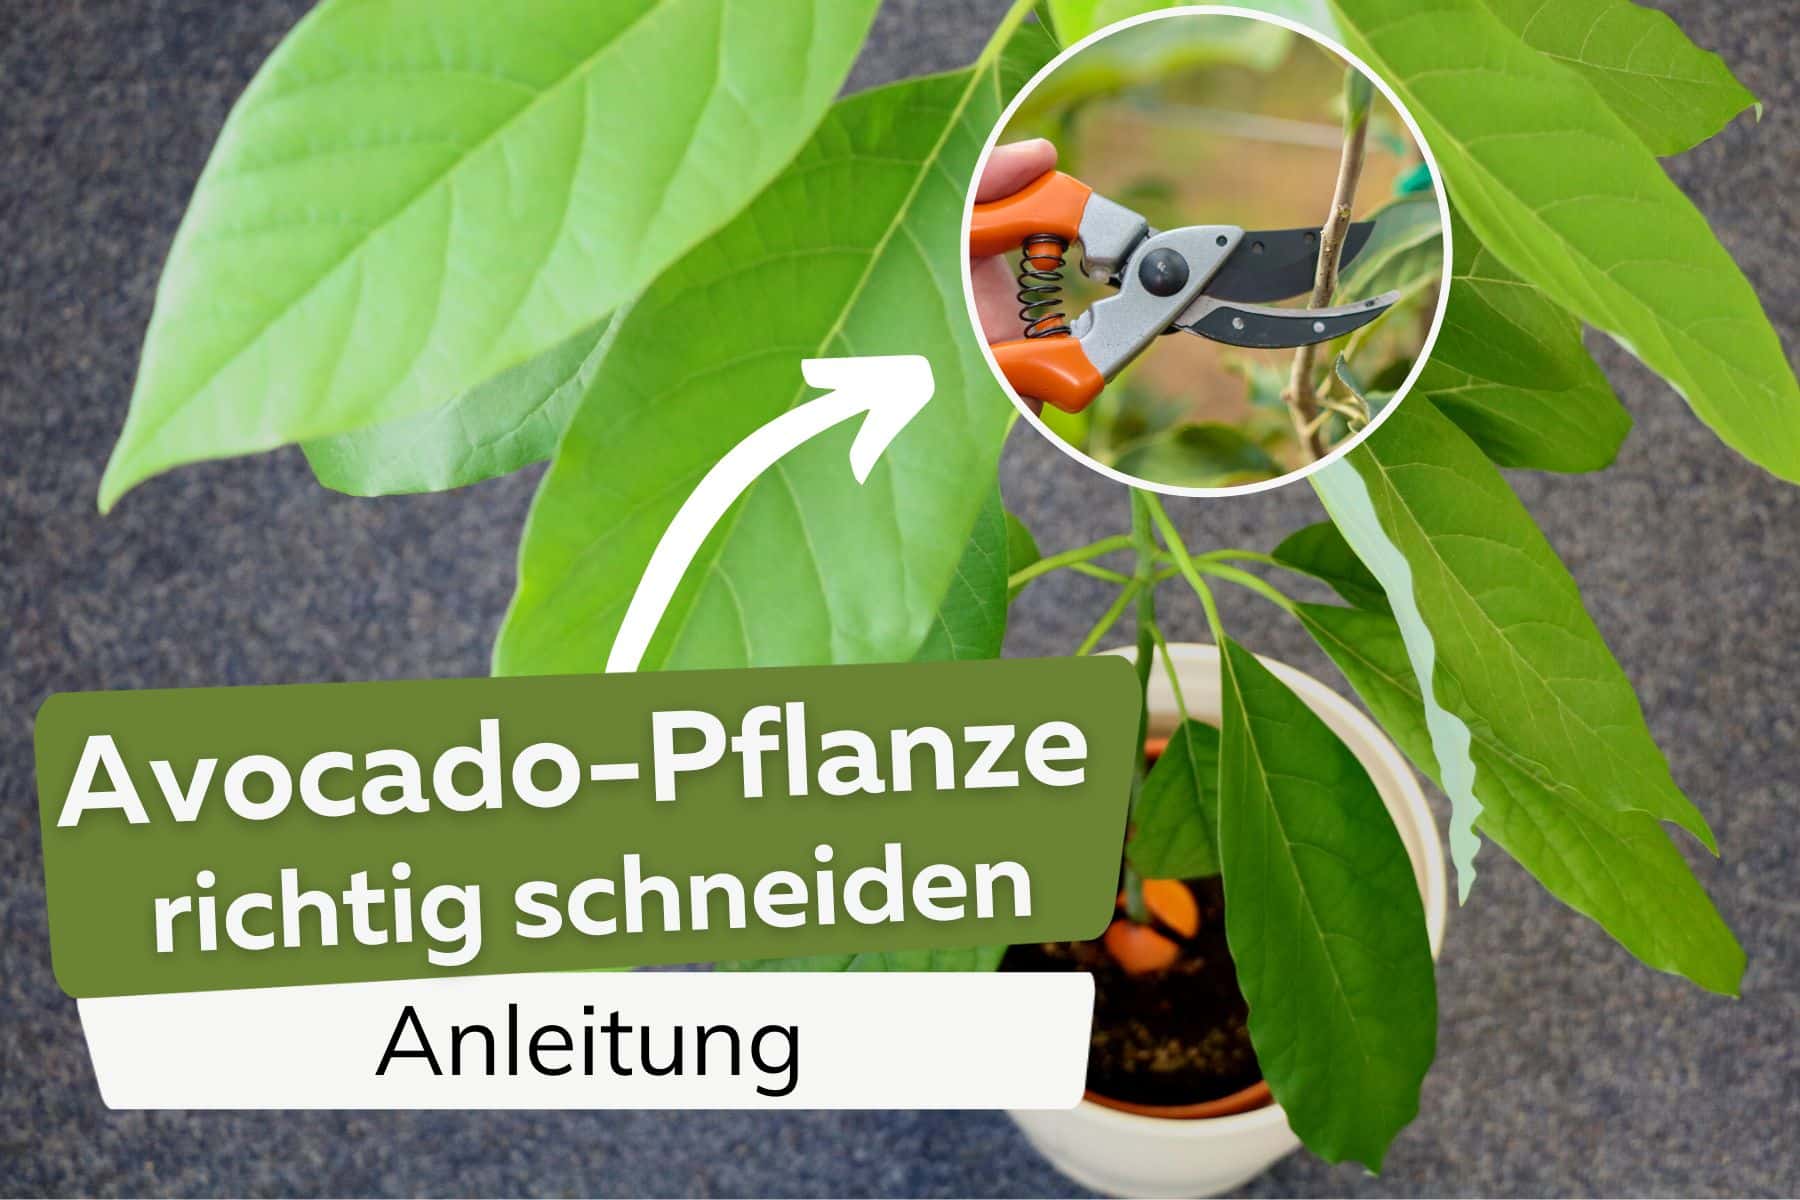 Avocado-Pflanze richtig schneiden Titel